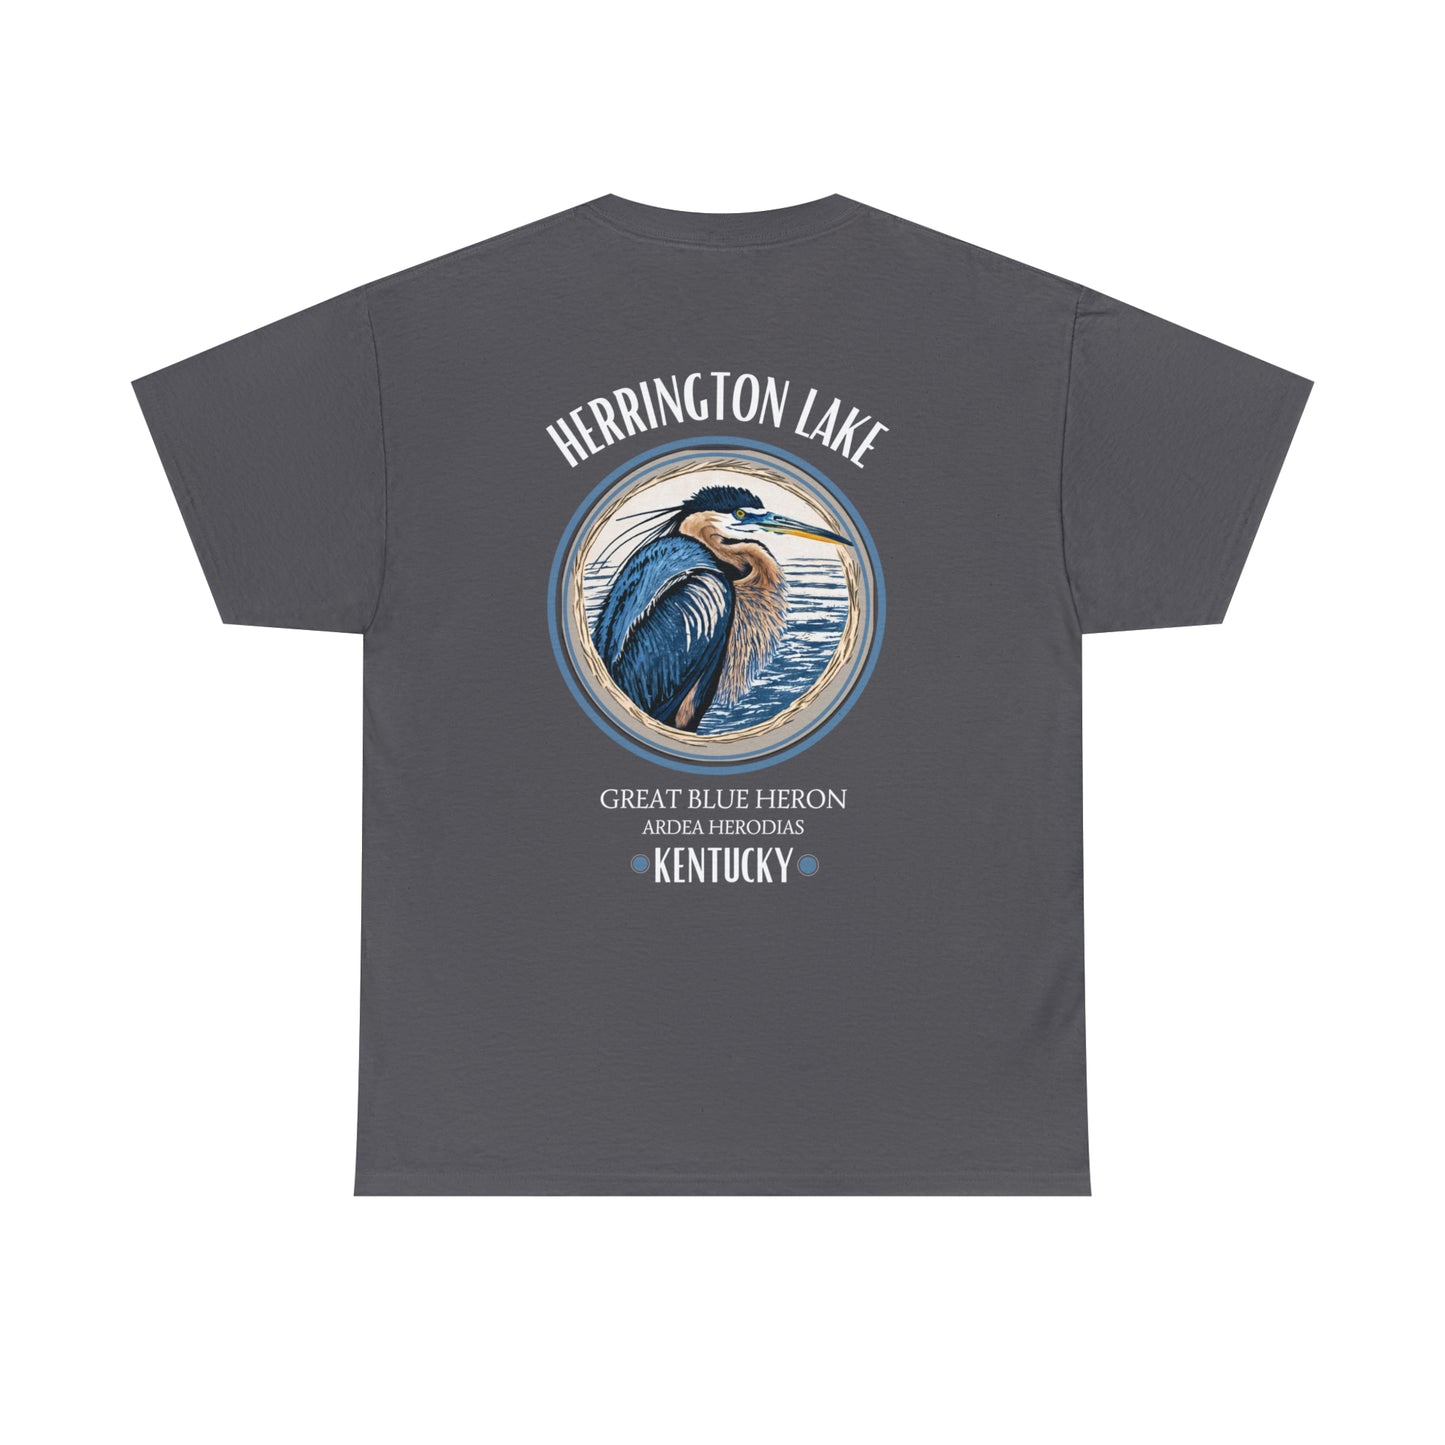 Great Blue Heron - Herrington Wildlife Collection Cotton Tee